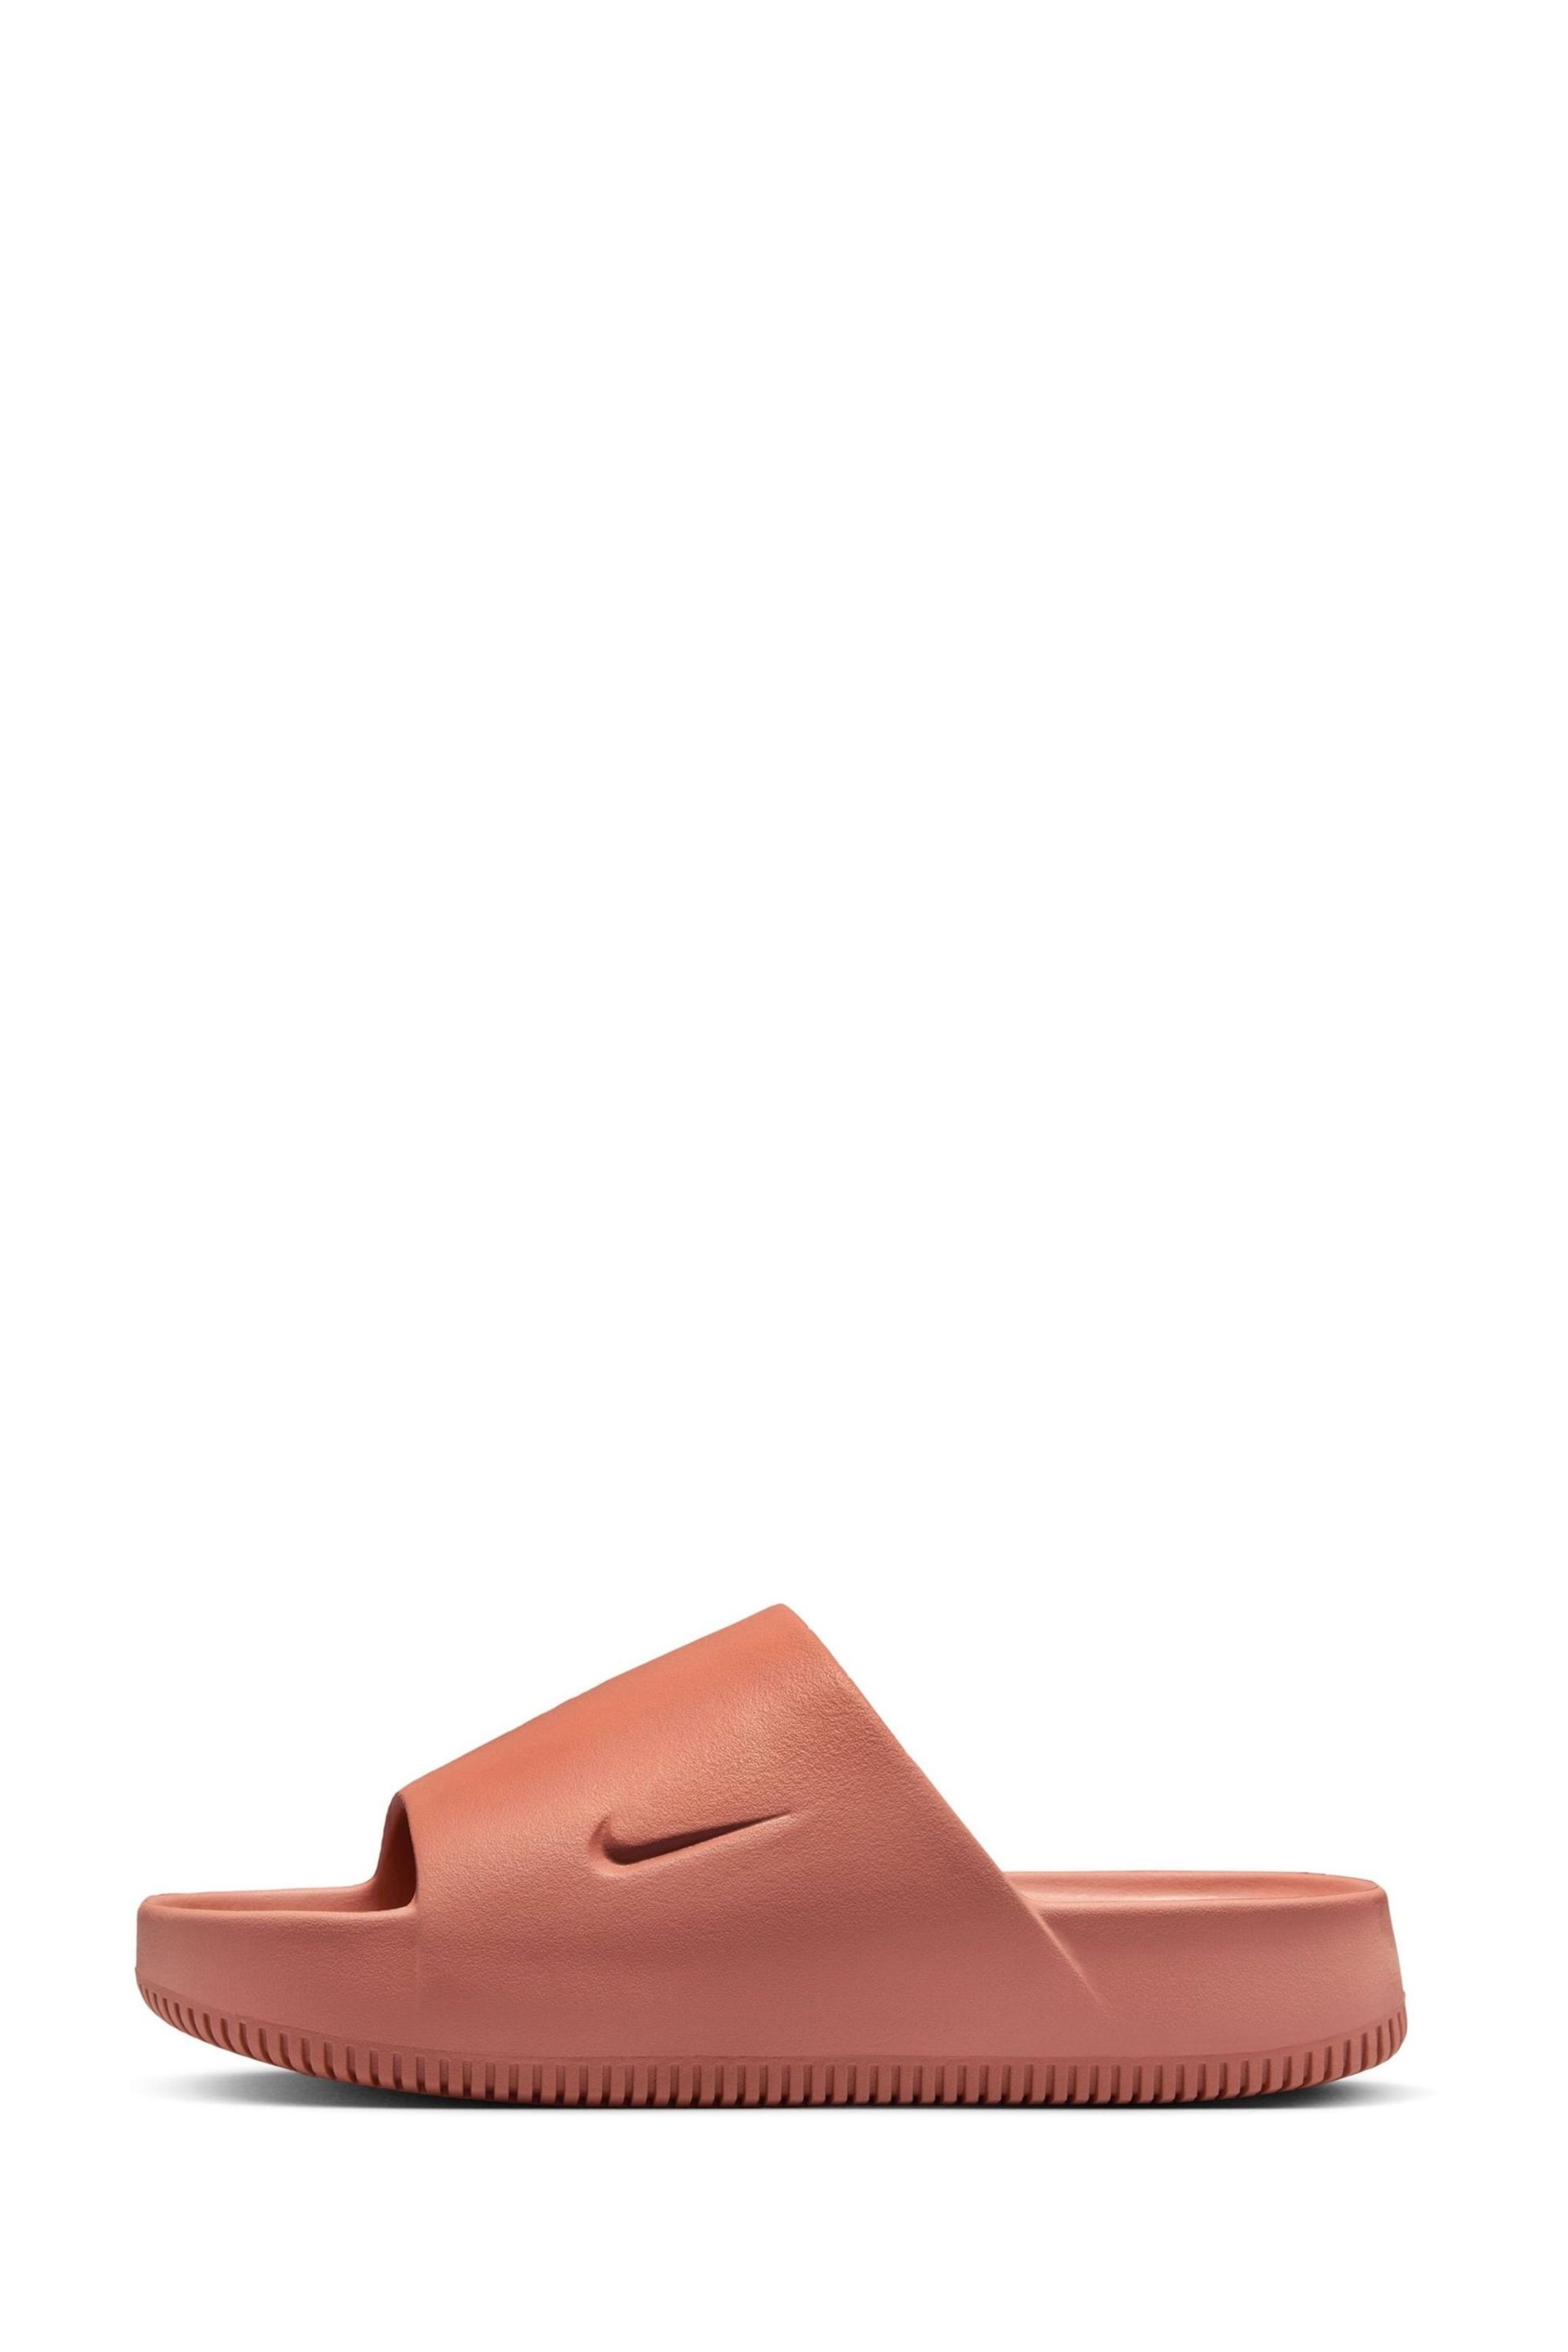 Nike Brown Calm Sliders - Image 2 of 6